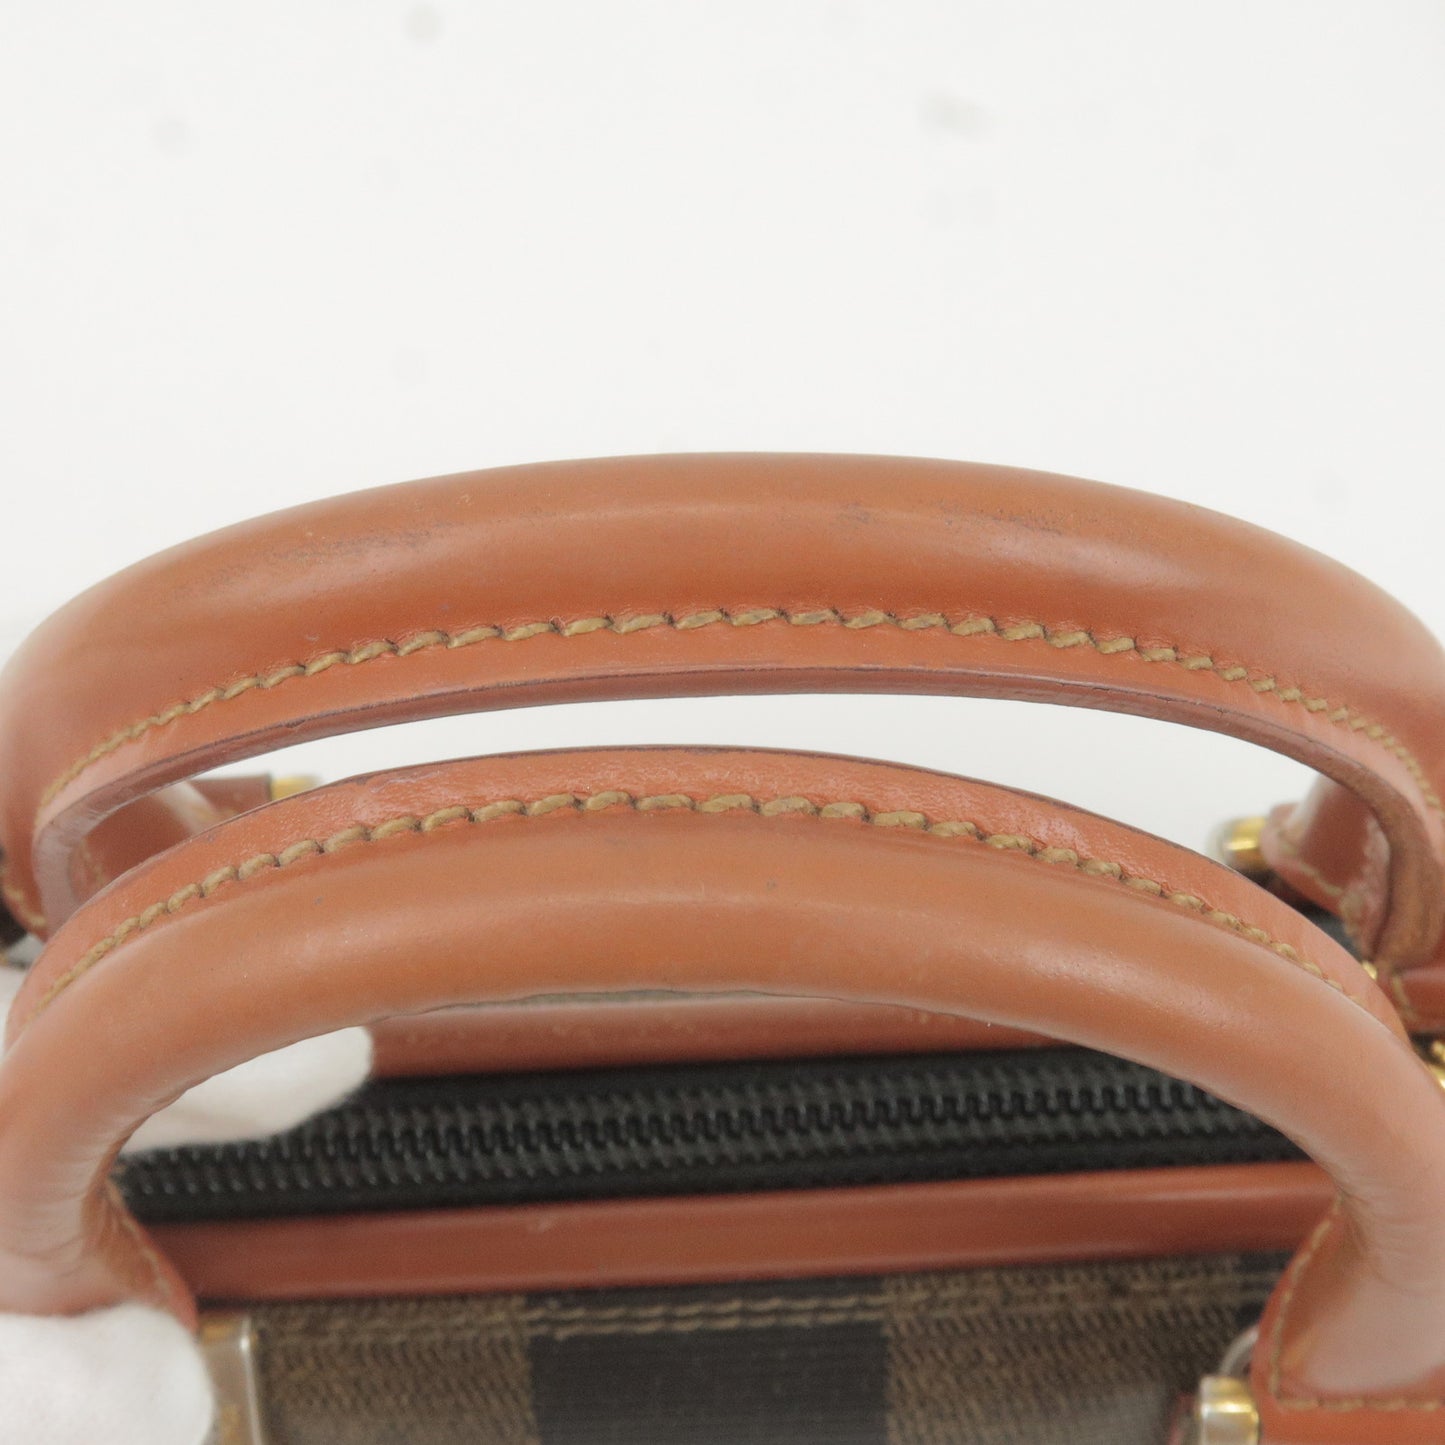 FENDI Pequin PVC Leather 2Way Bag Hand Bag Brown Khaki Black 10124